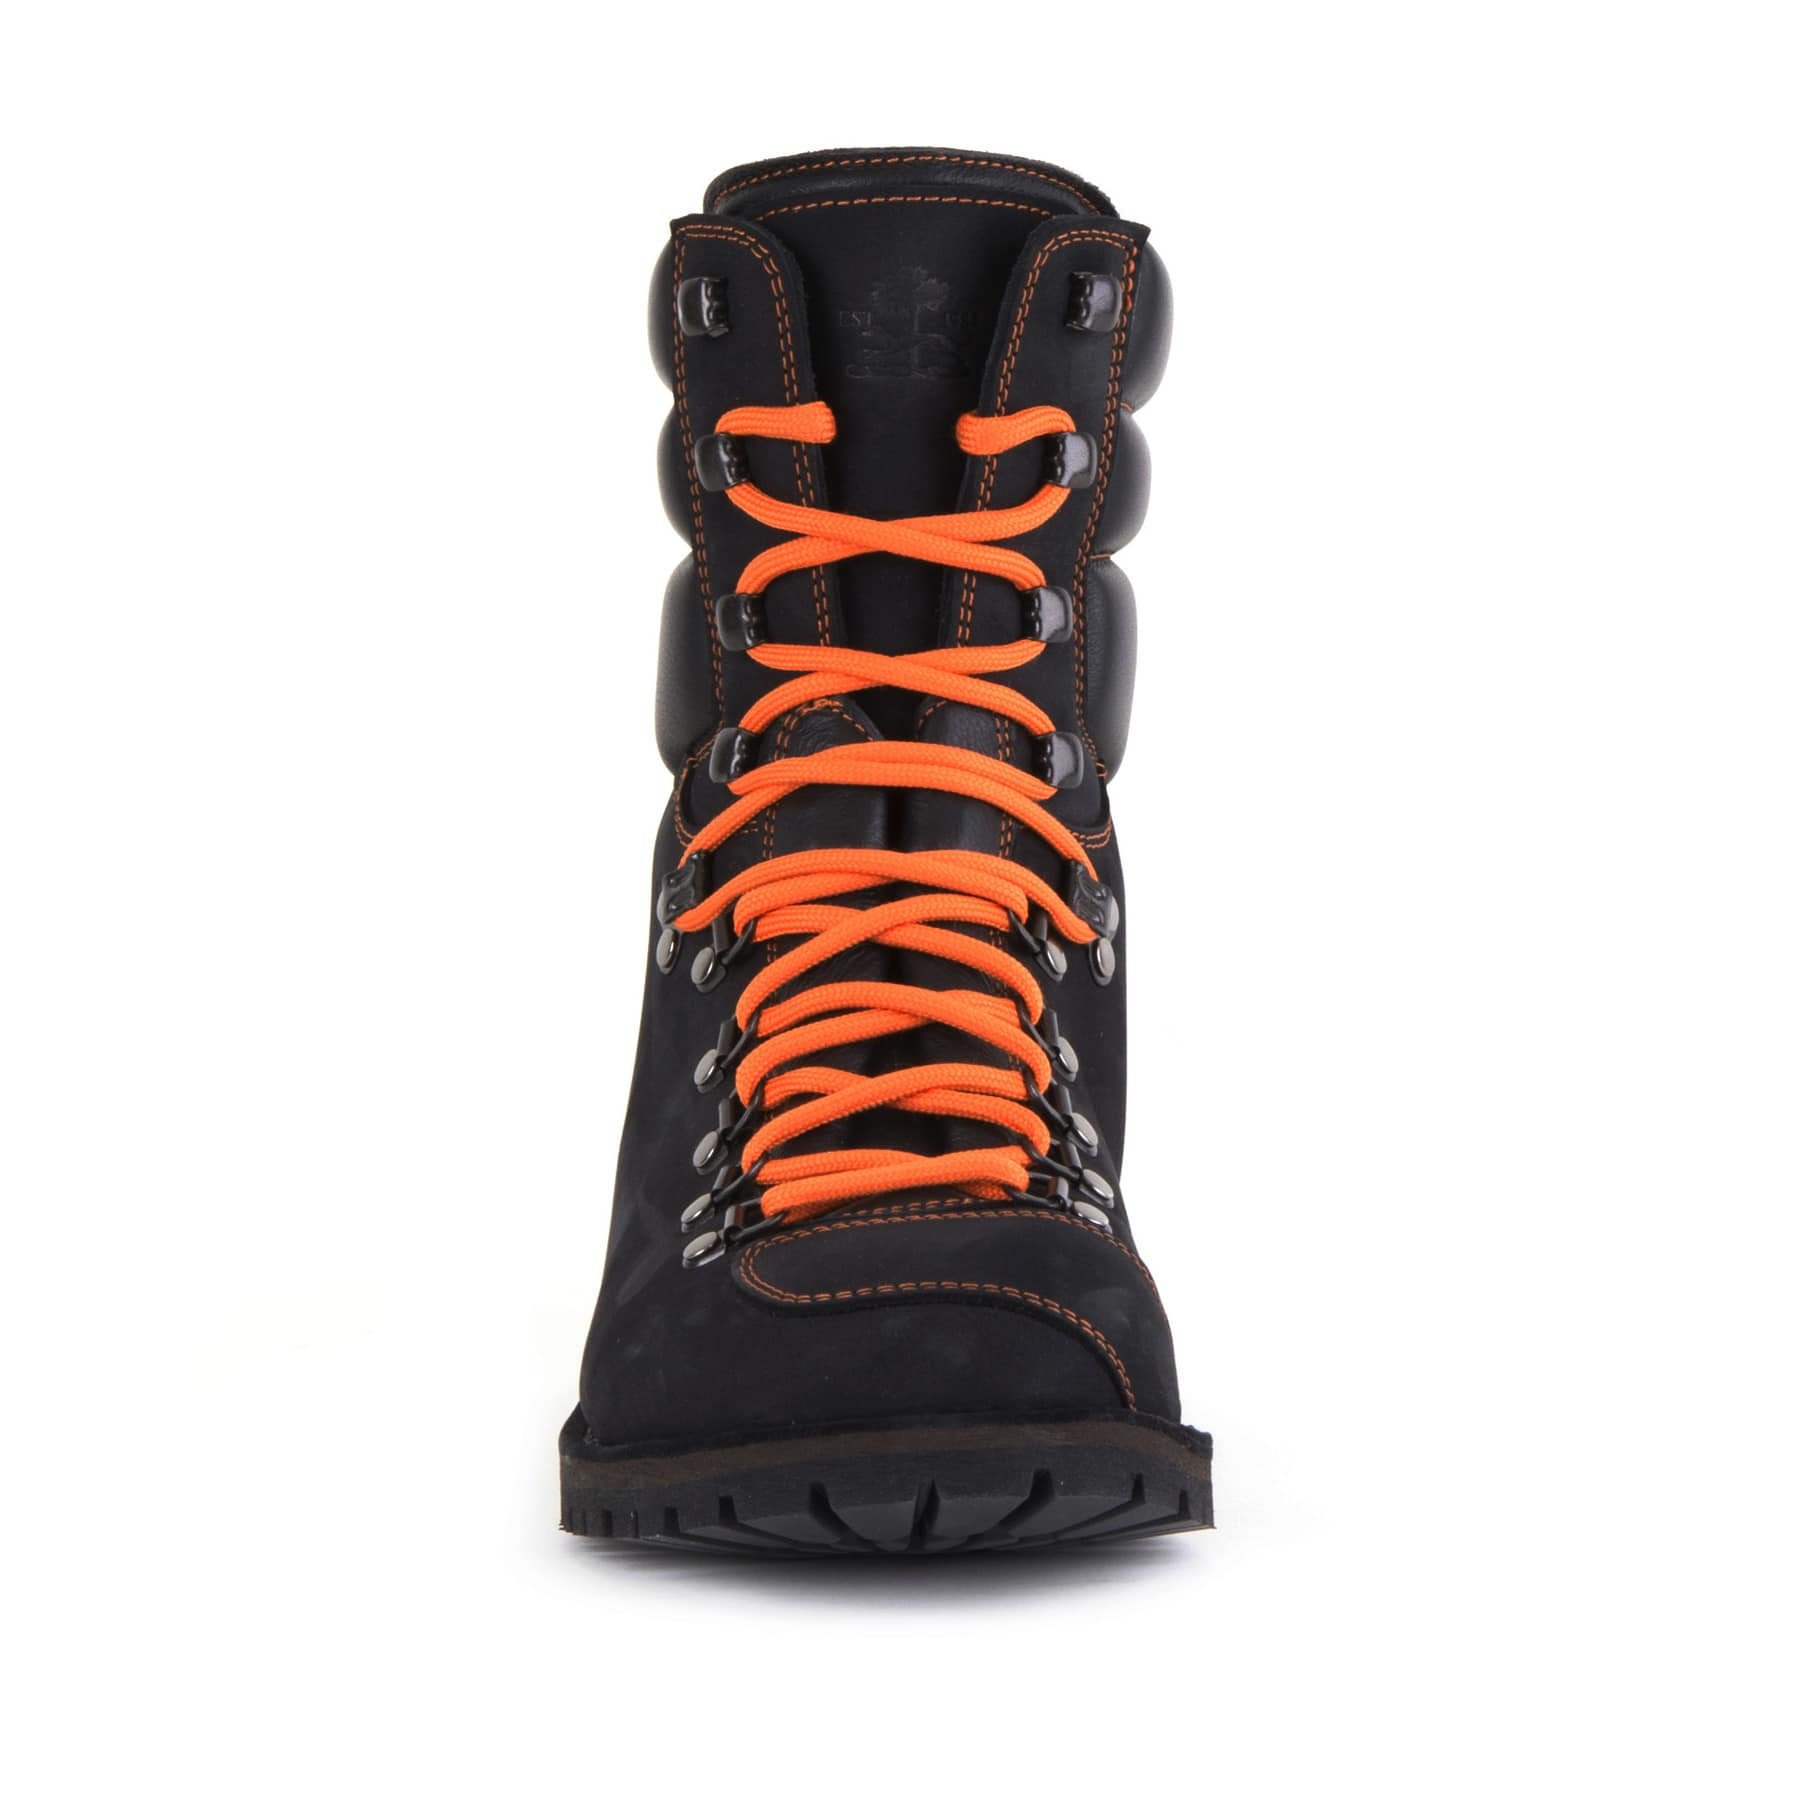 Biker Boot AdventureSE Denver Black, black gents boot, orange stitching